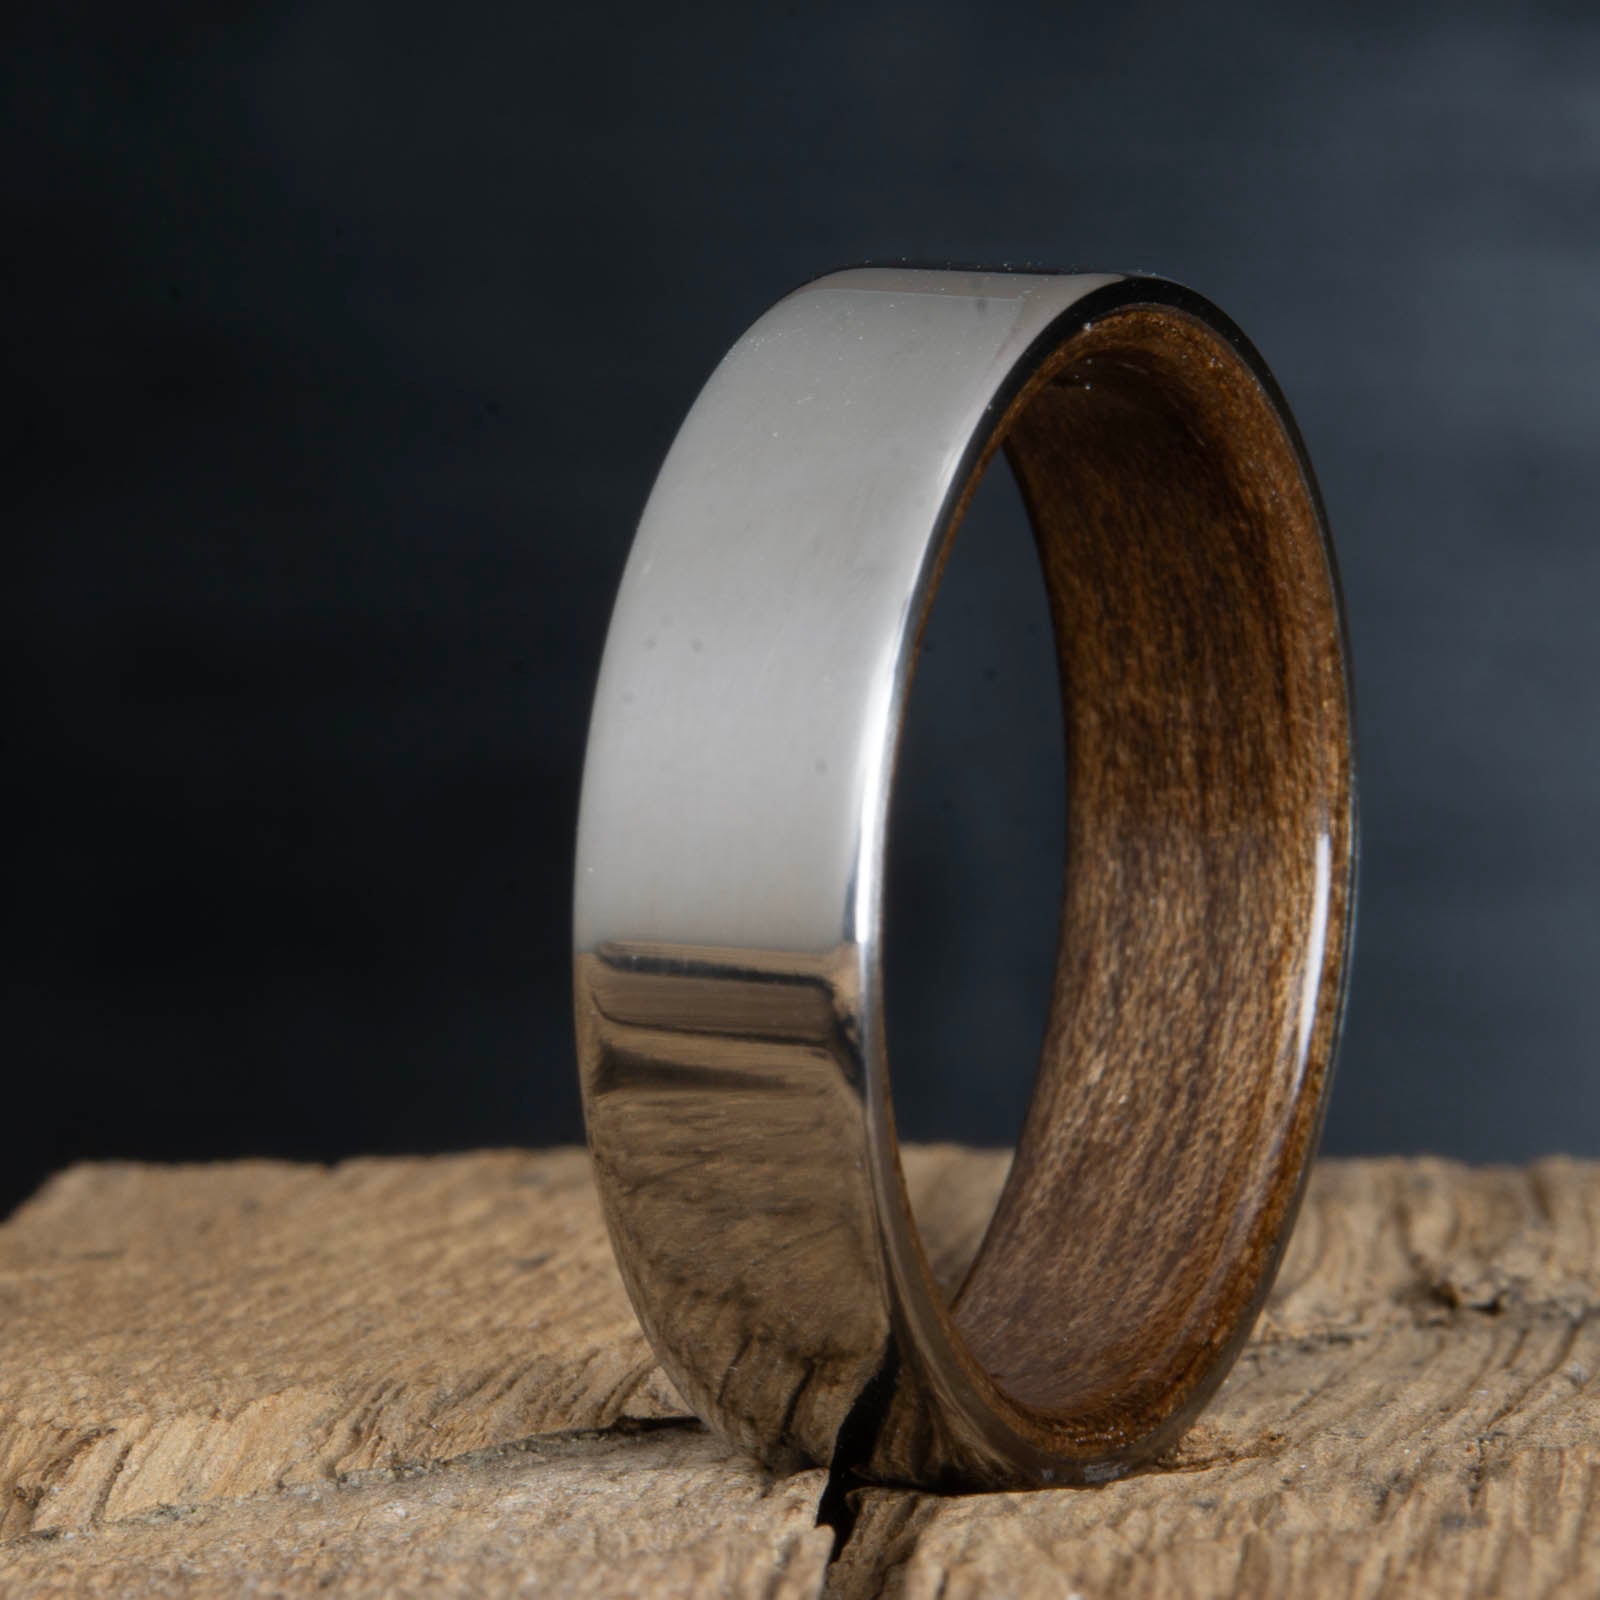 titanium walnut ring- polished titanium wood ring with walnut